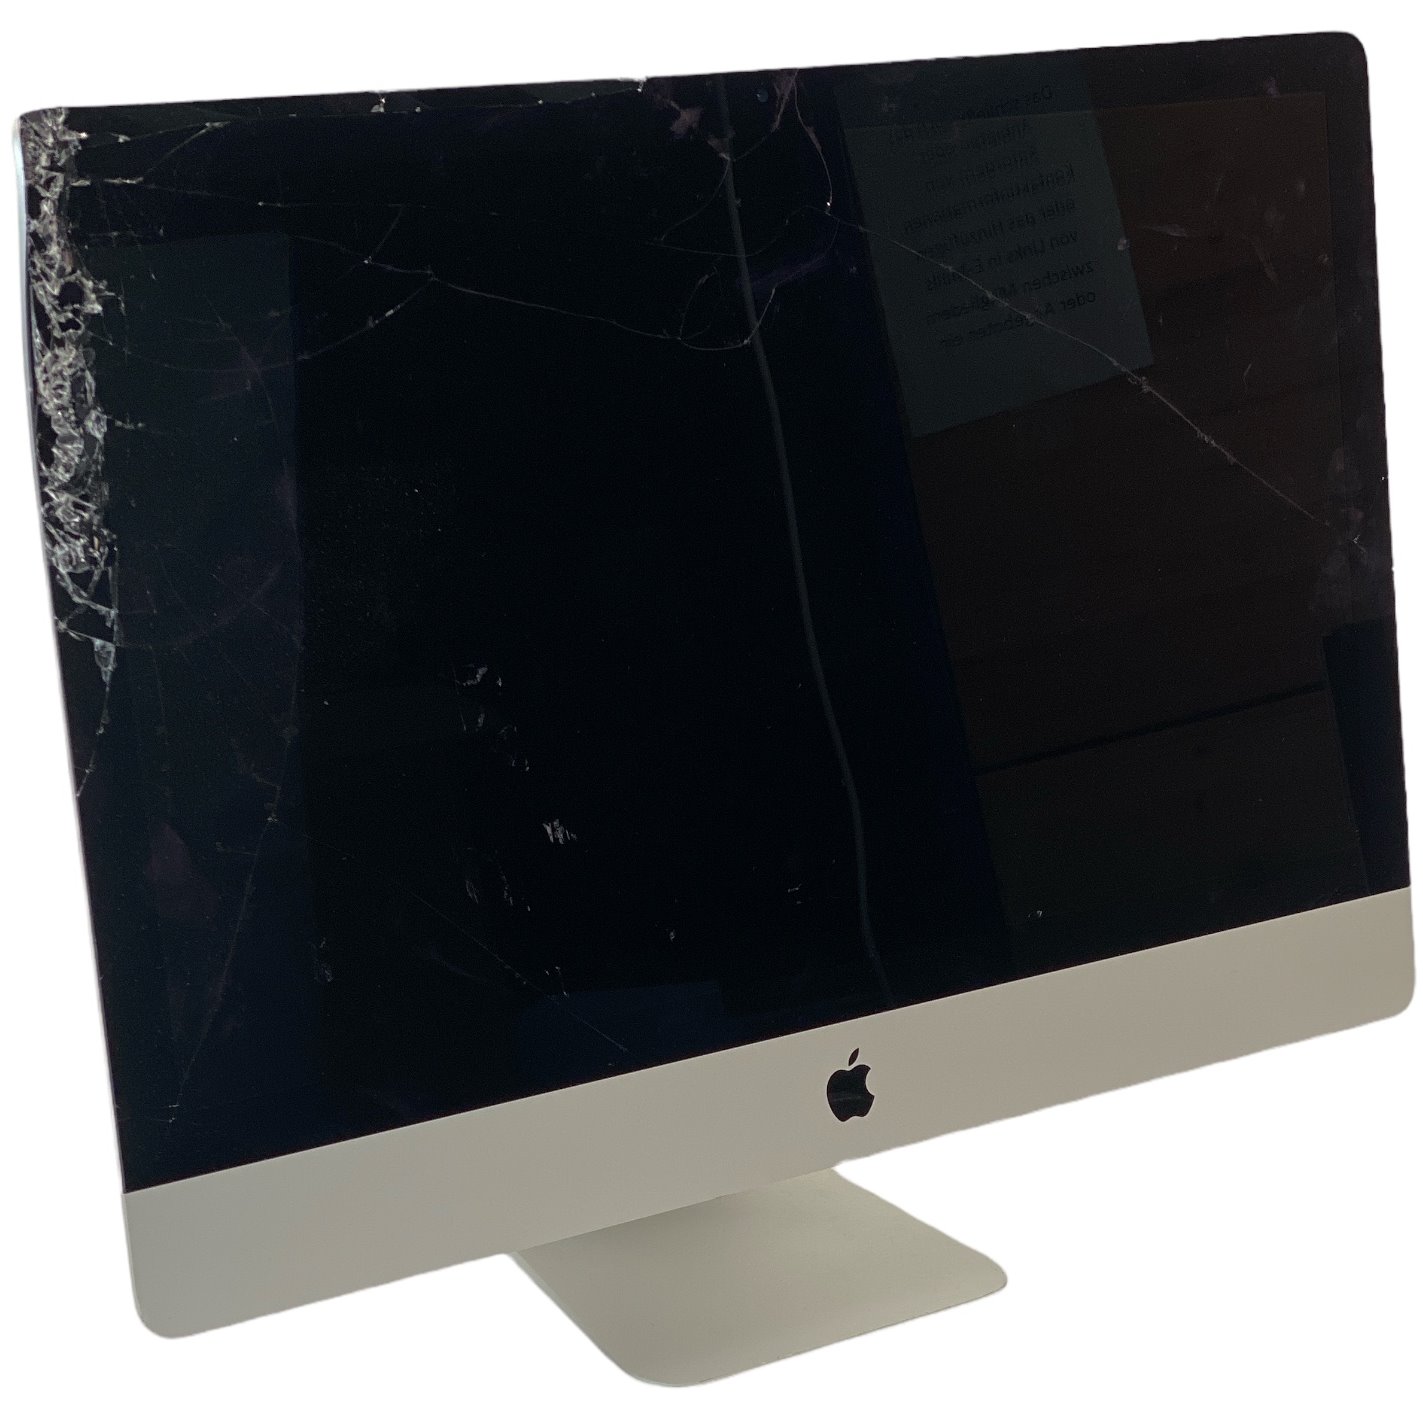 Apple iMac 27" 17,1 Core i7 6700K @ 4GHz 16GB 256GB SSD Late 2015 Displaybruch